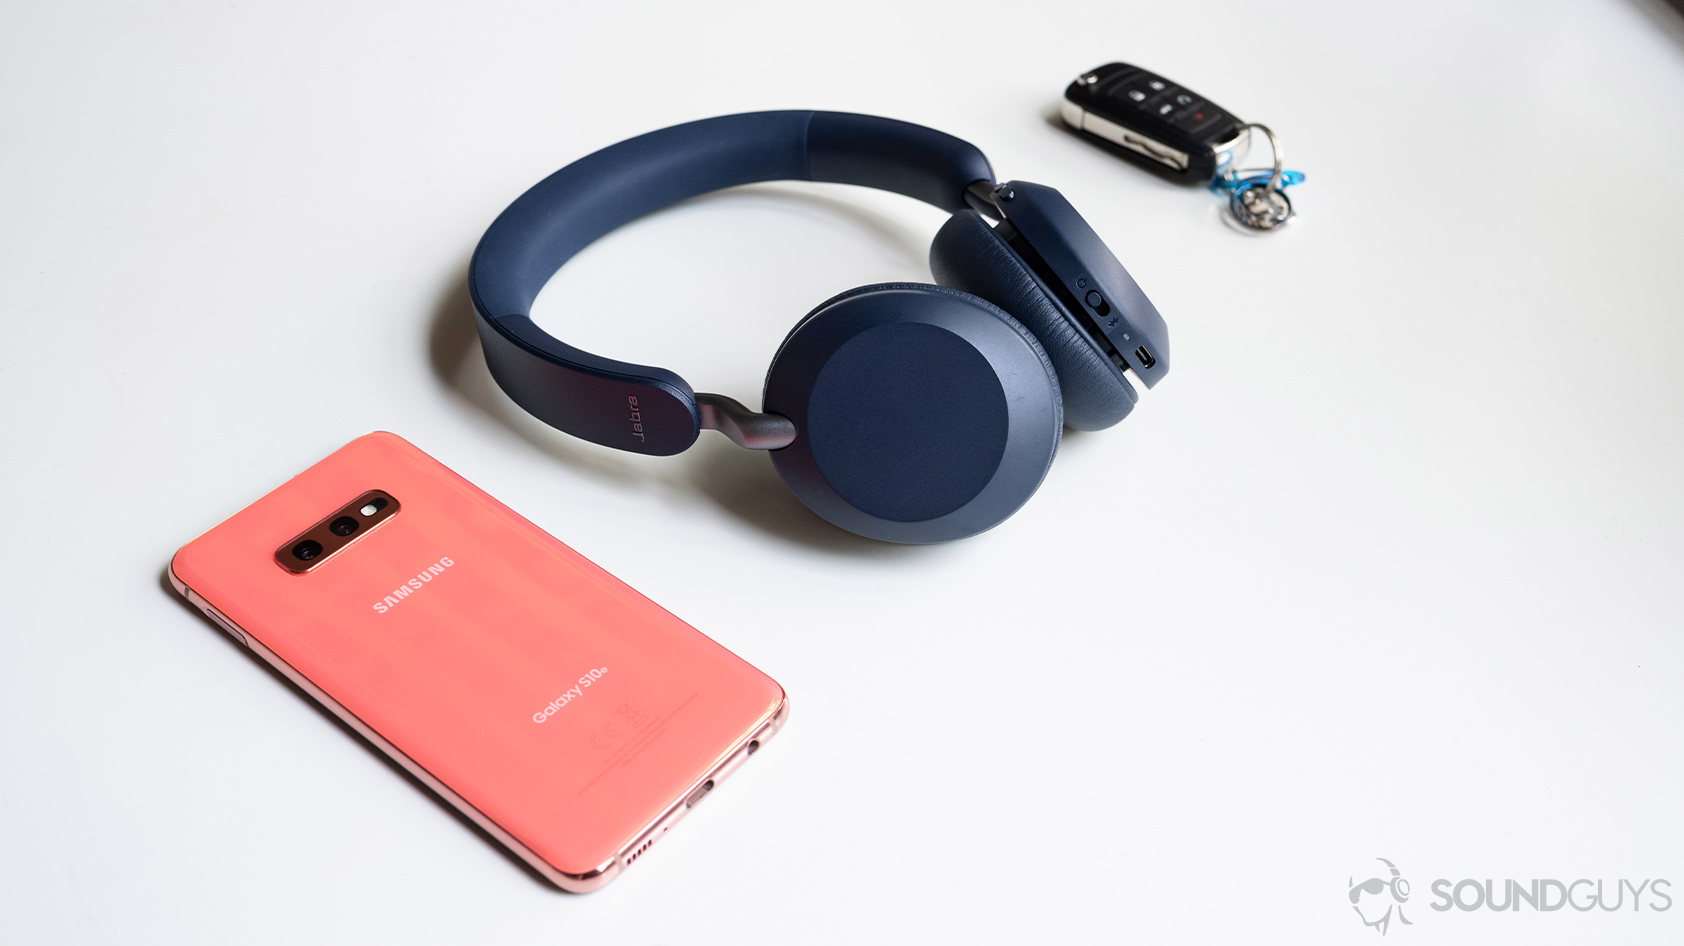 Tragisch Mooie jurk Bloesem Jabra Elite 45h review: Take these headphones anywhere - SoundGuys